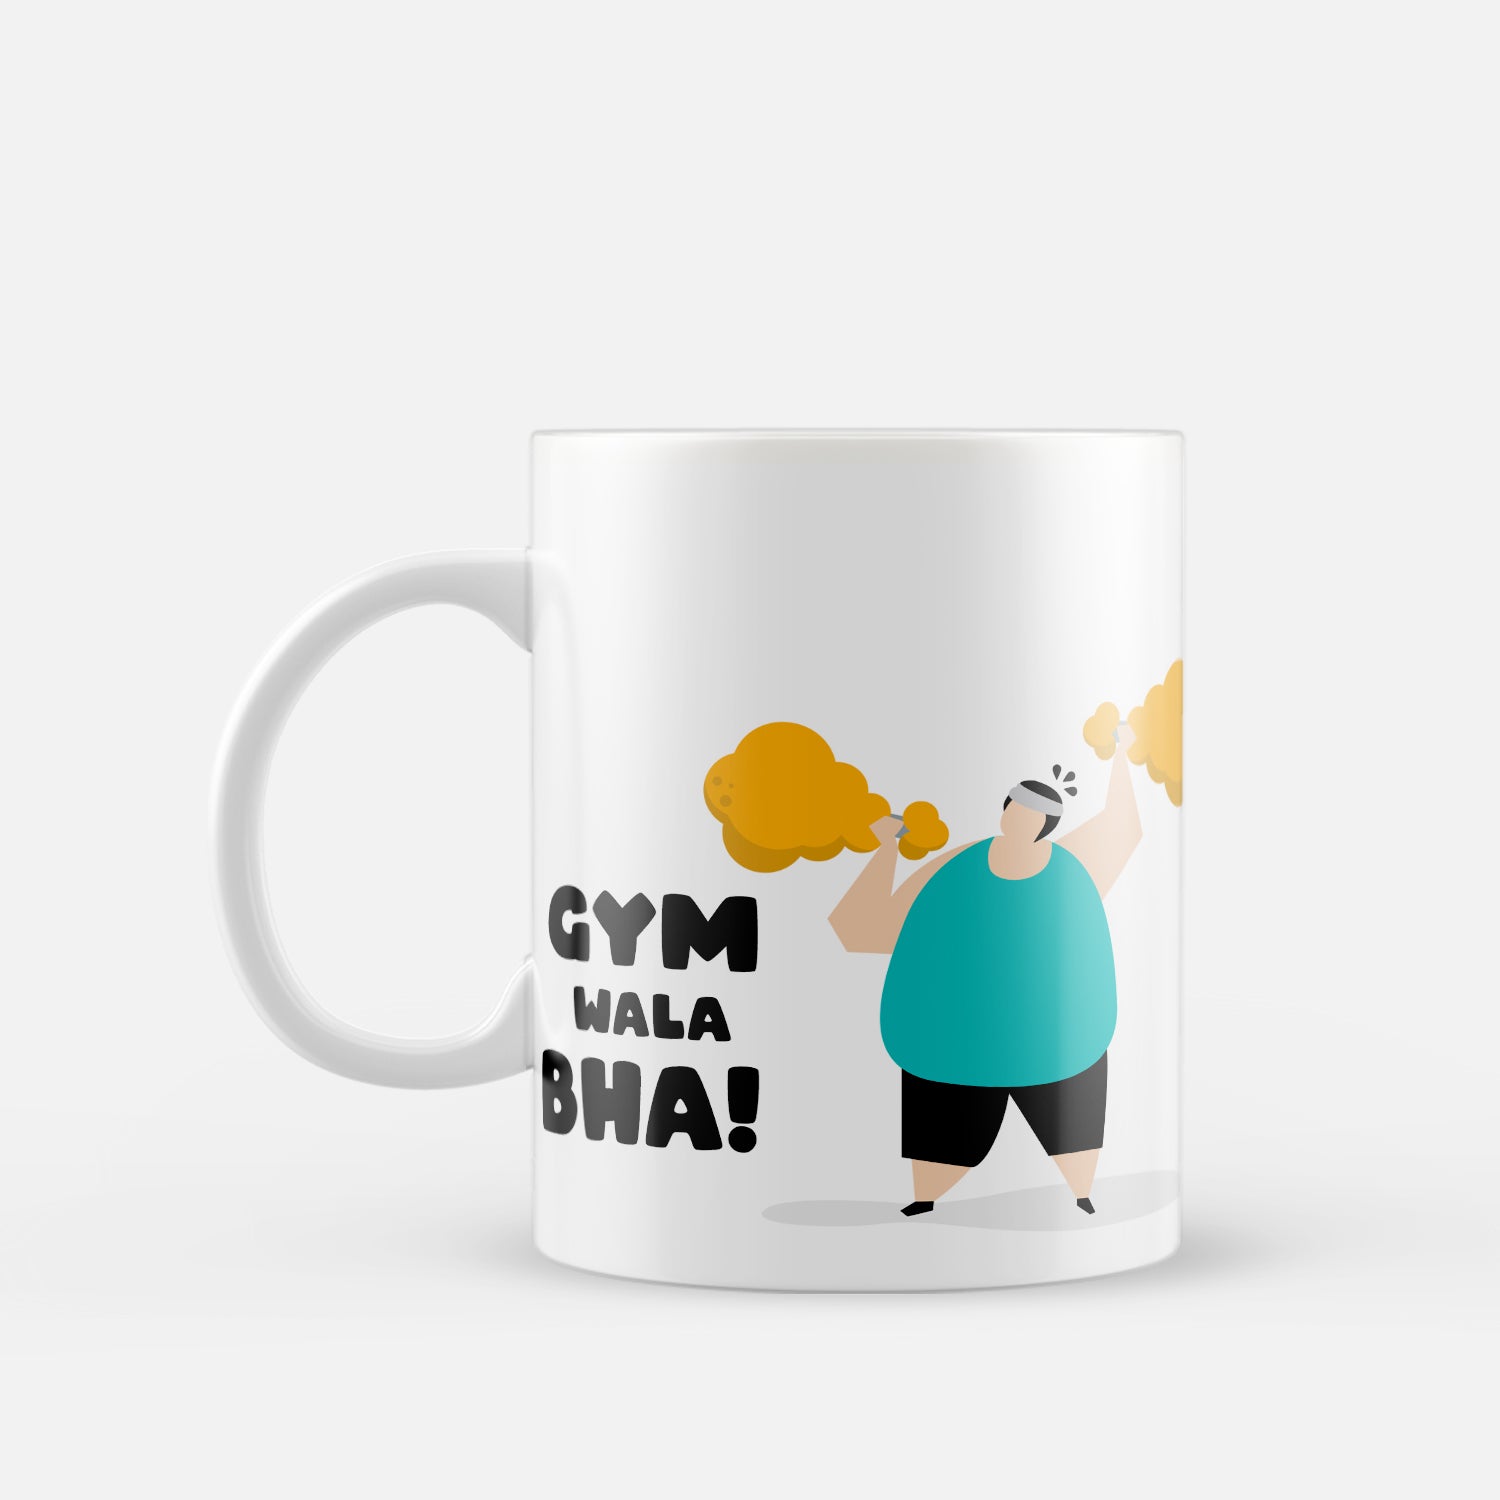 "Gym Wala Bhai" Brother Ceramic Coffee/Tea Mug 2